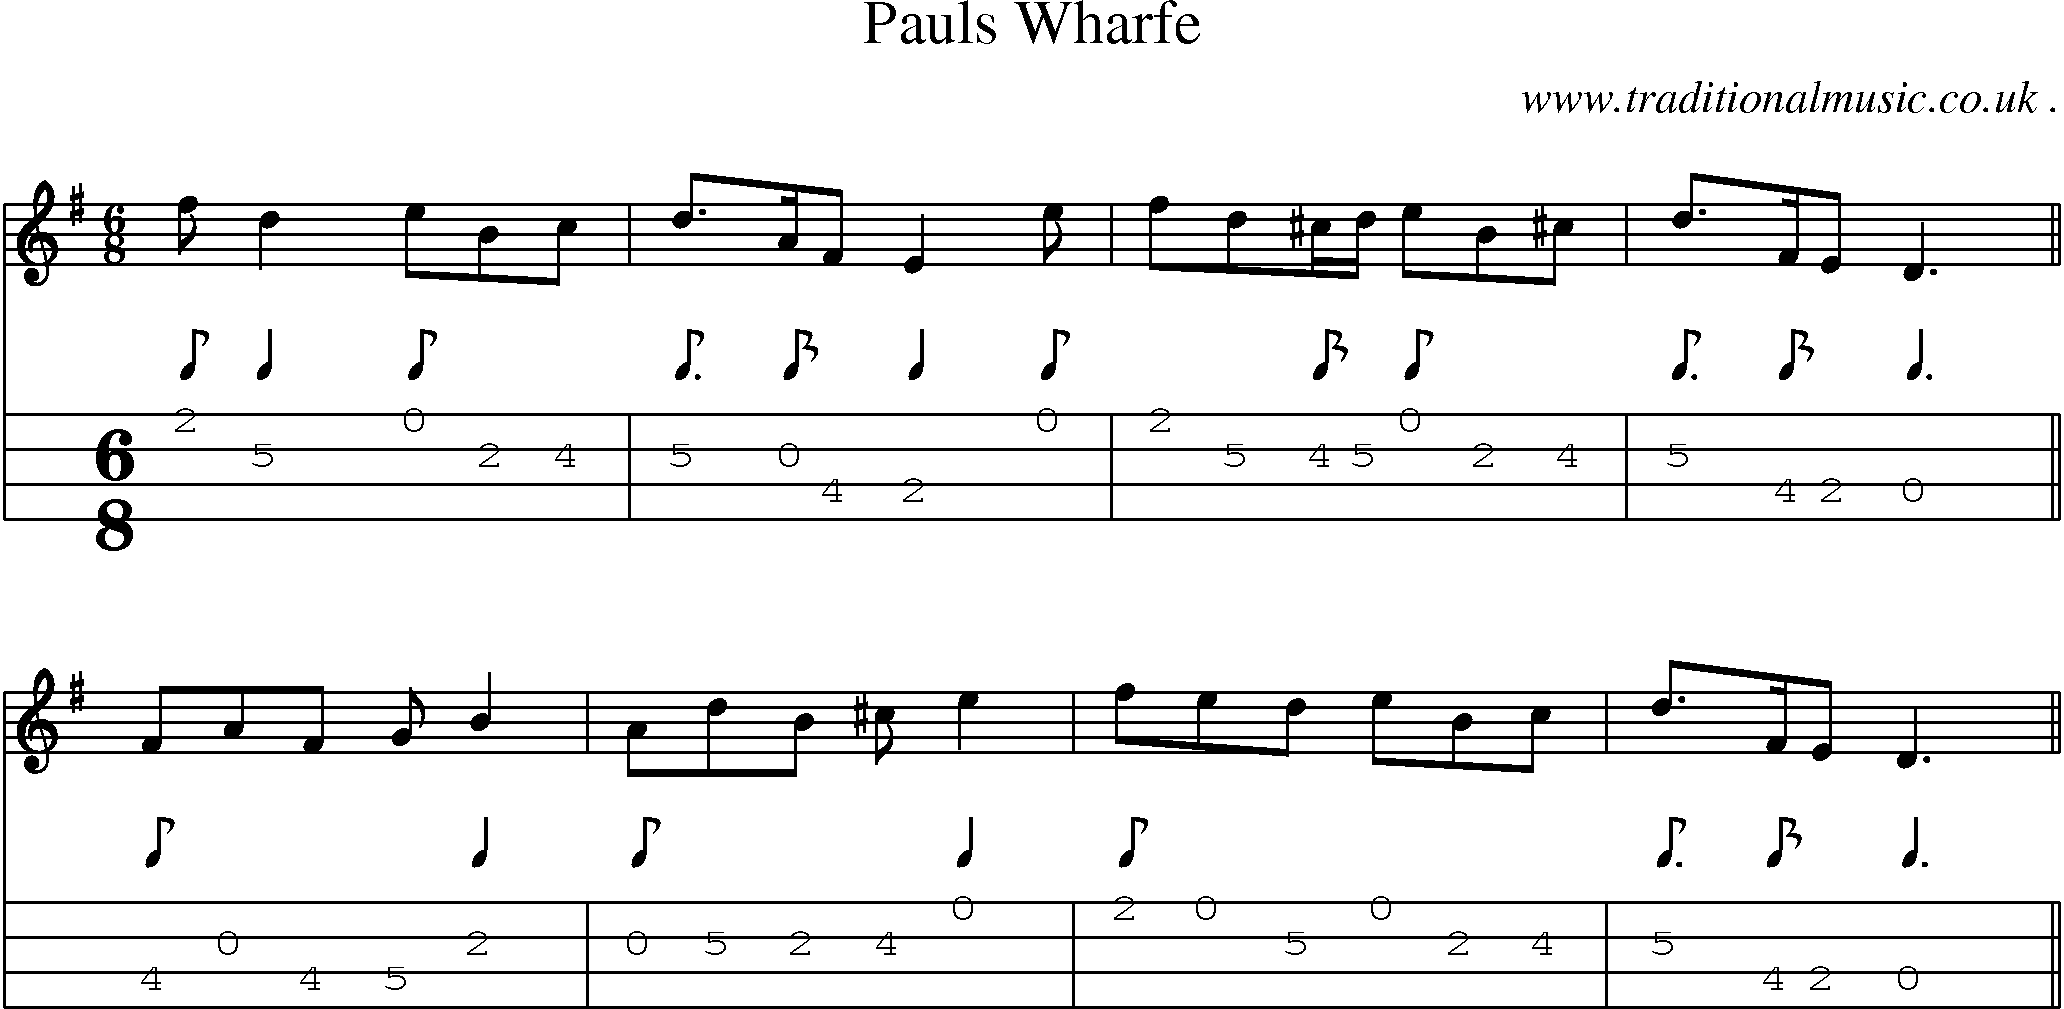 Sheet-music  score, Chords and Mandolin Tabs for Pauls Wharfe